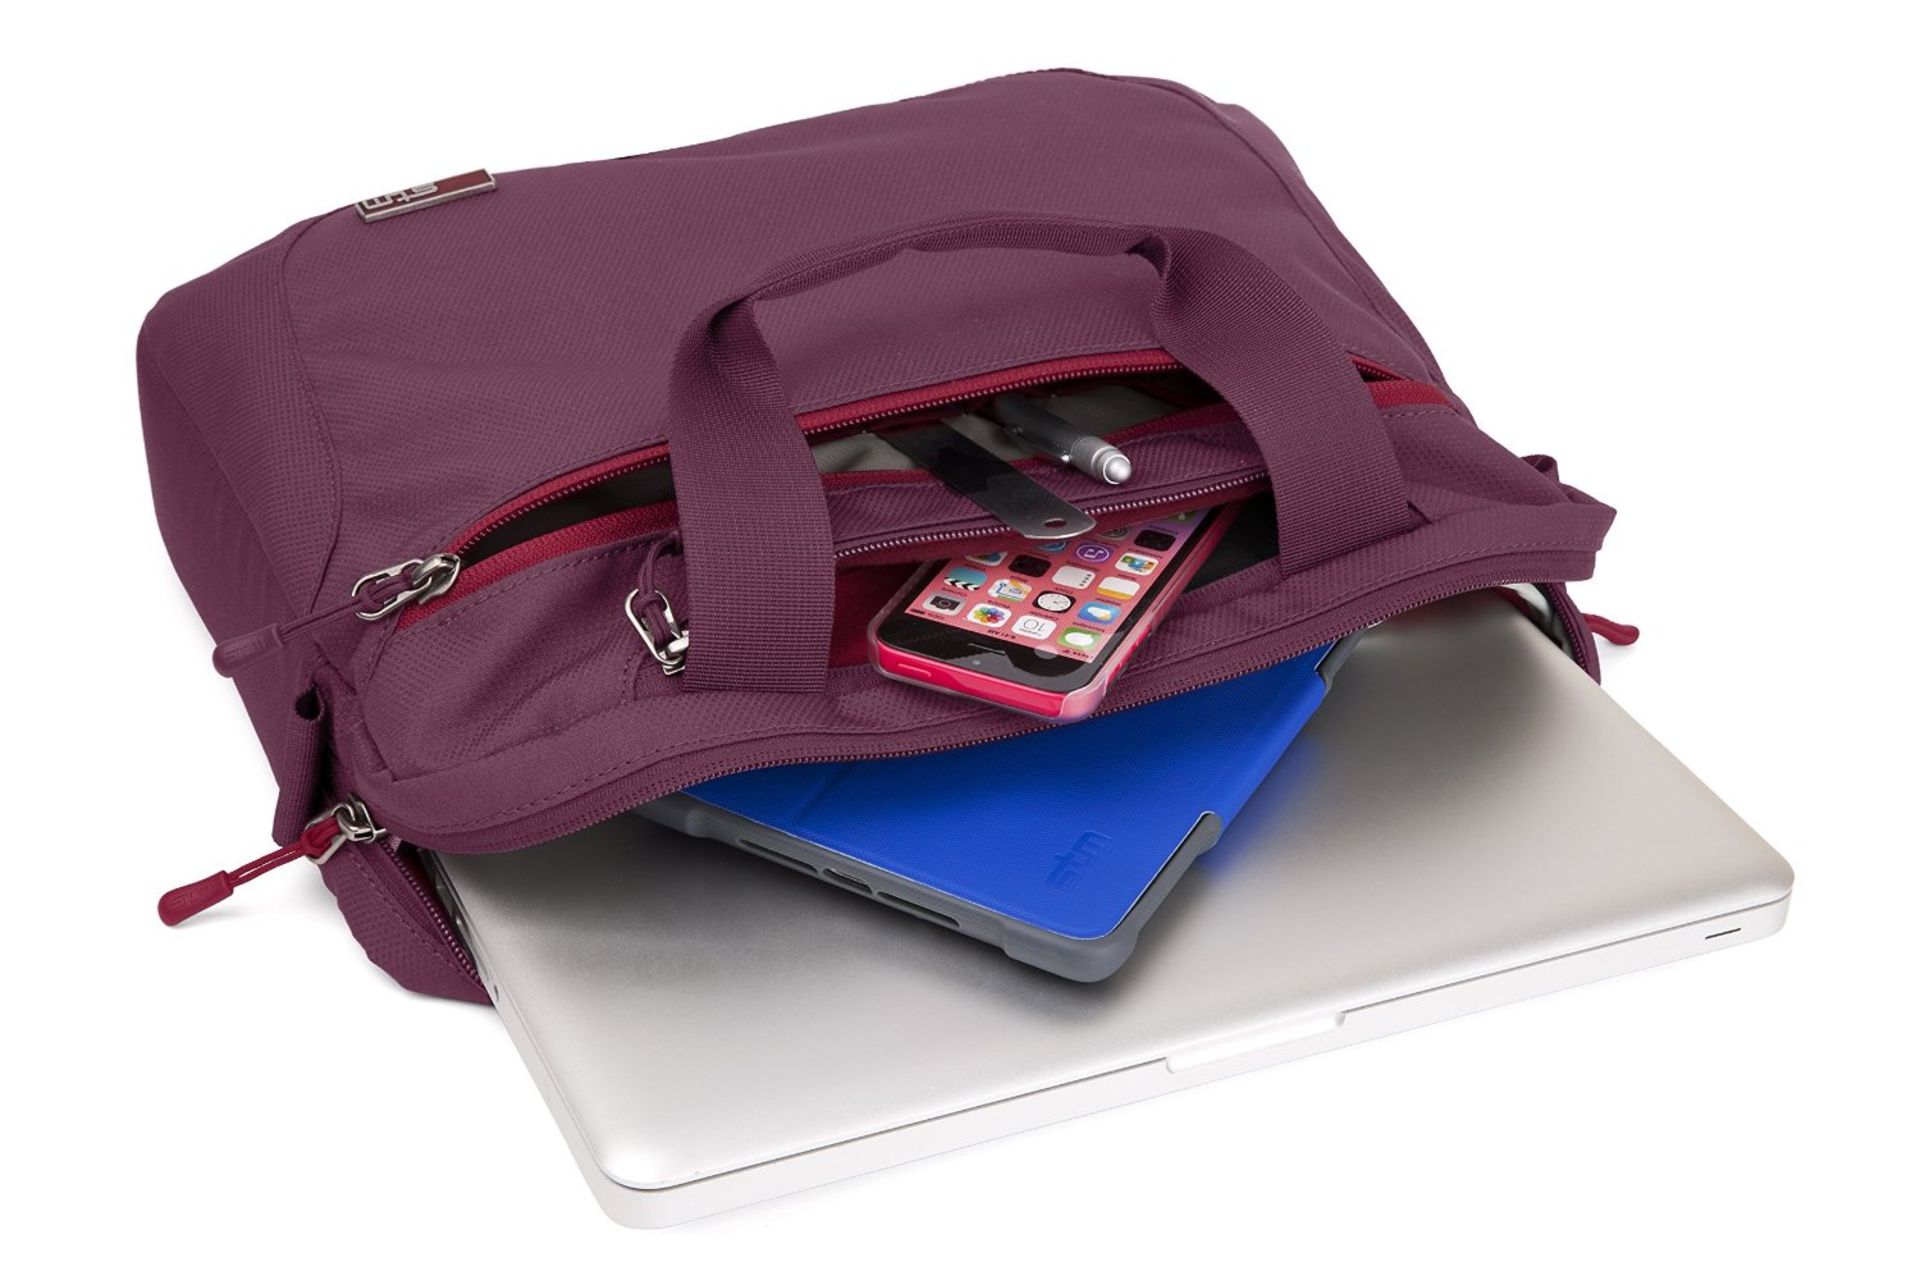 V *TRADE QTY* Brand New STM Swift Medium Shoudler Bag For Up To 15" Laptop/Tablet Sutiable For - Image 2 of 3